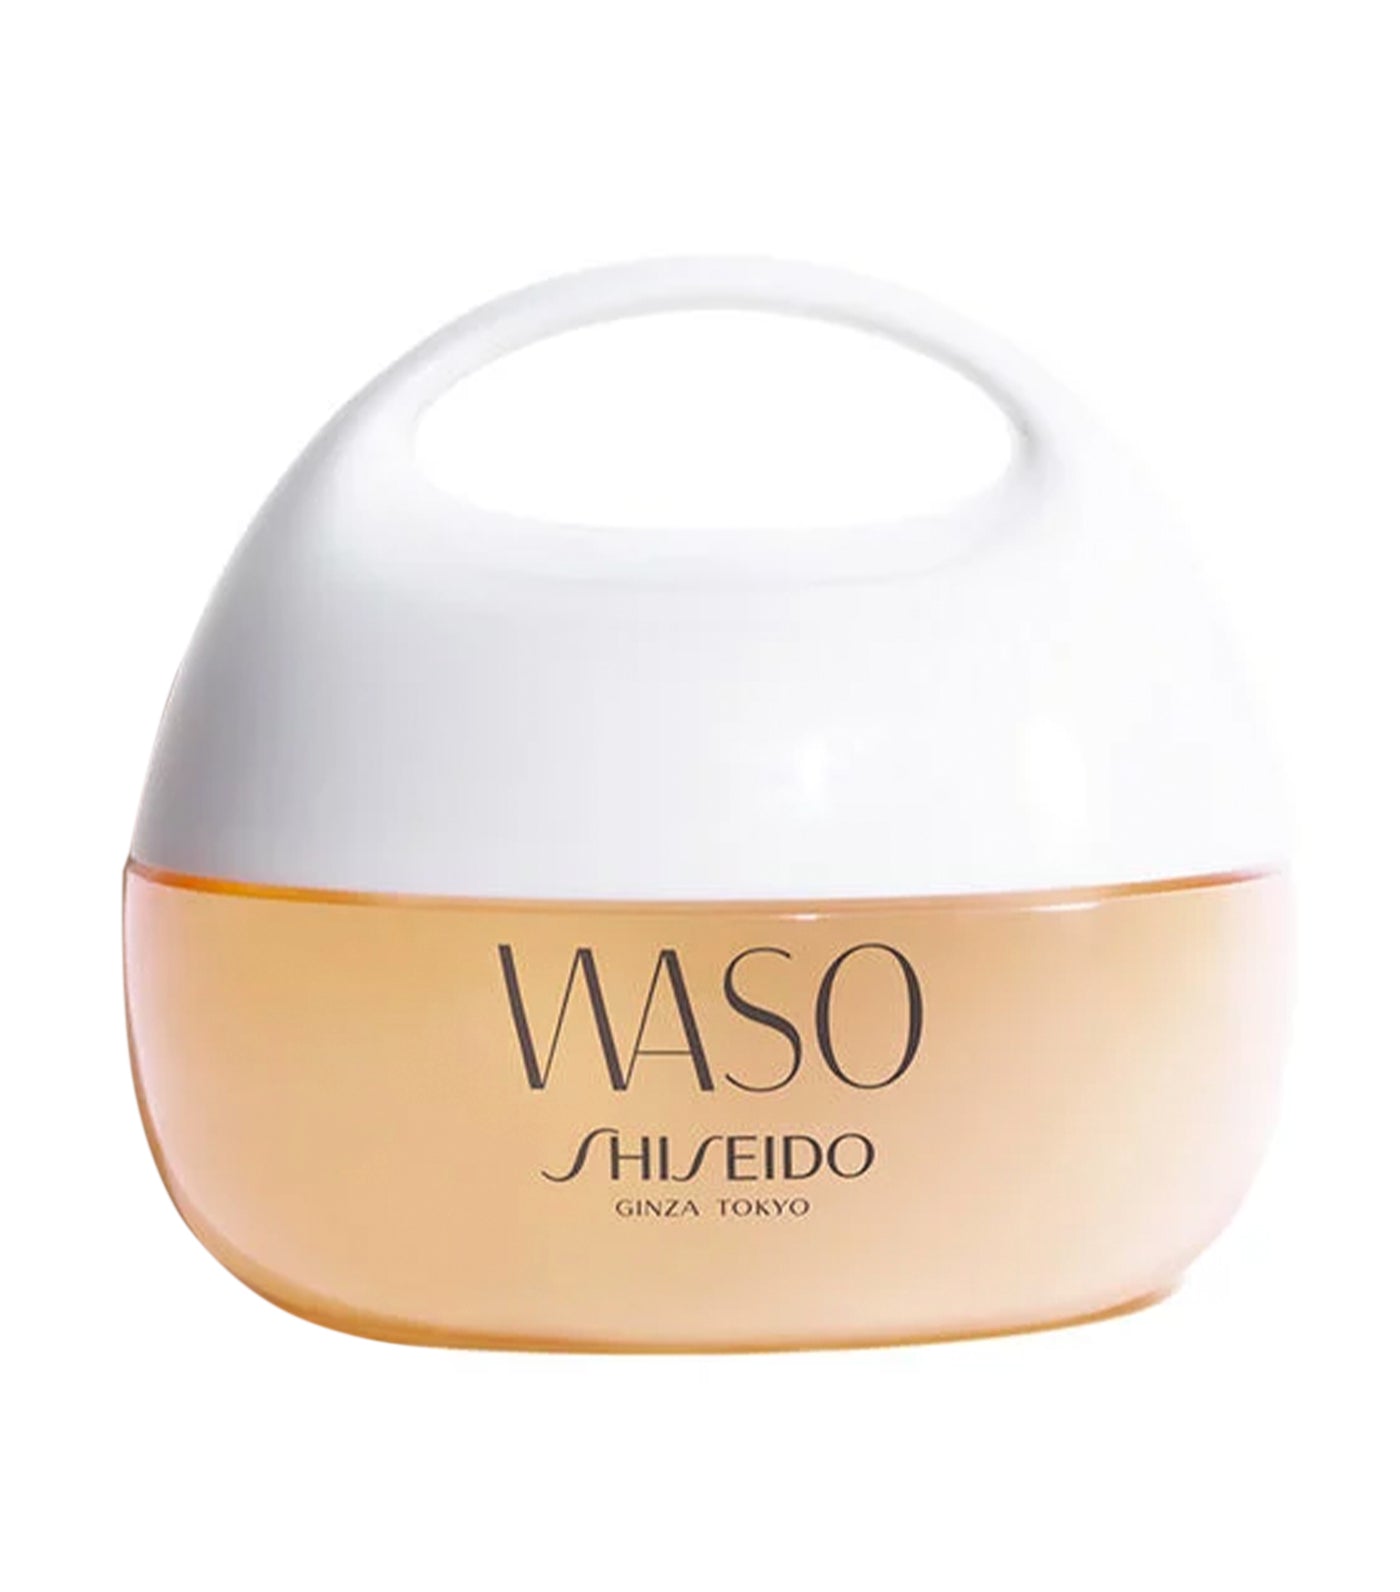 Shiseido WASO Clear Mega-Hydrating Cream